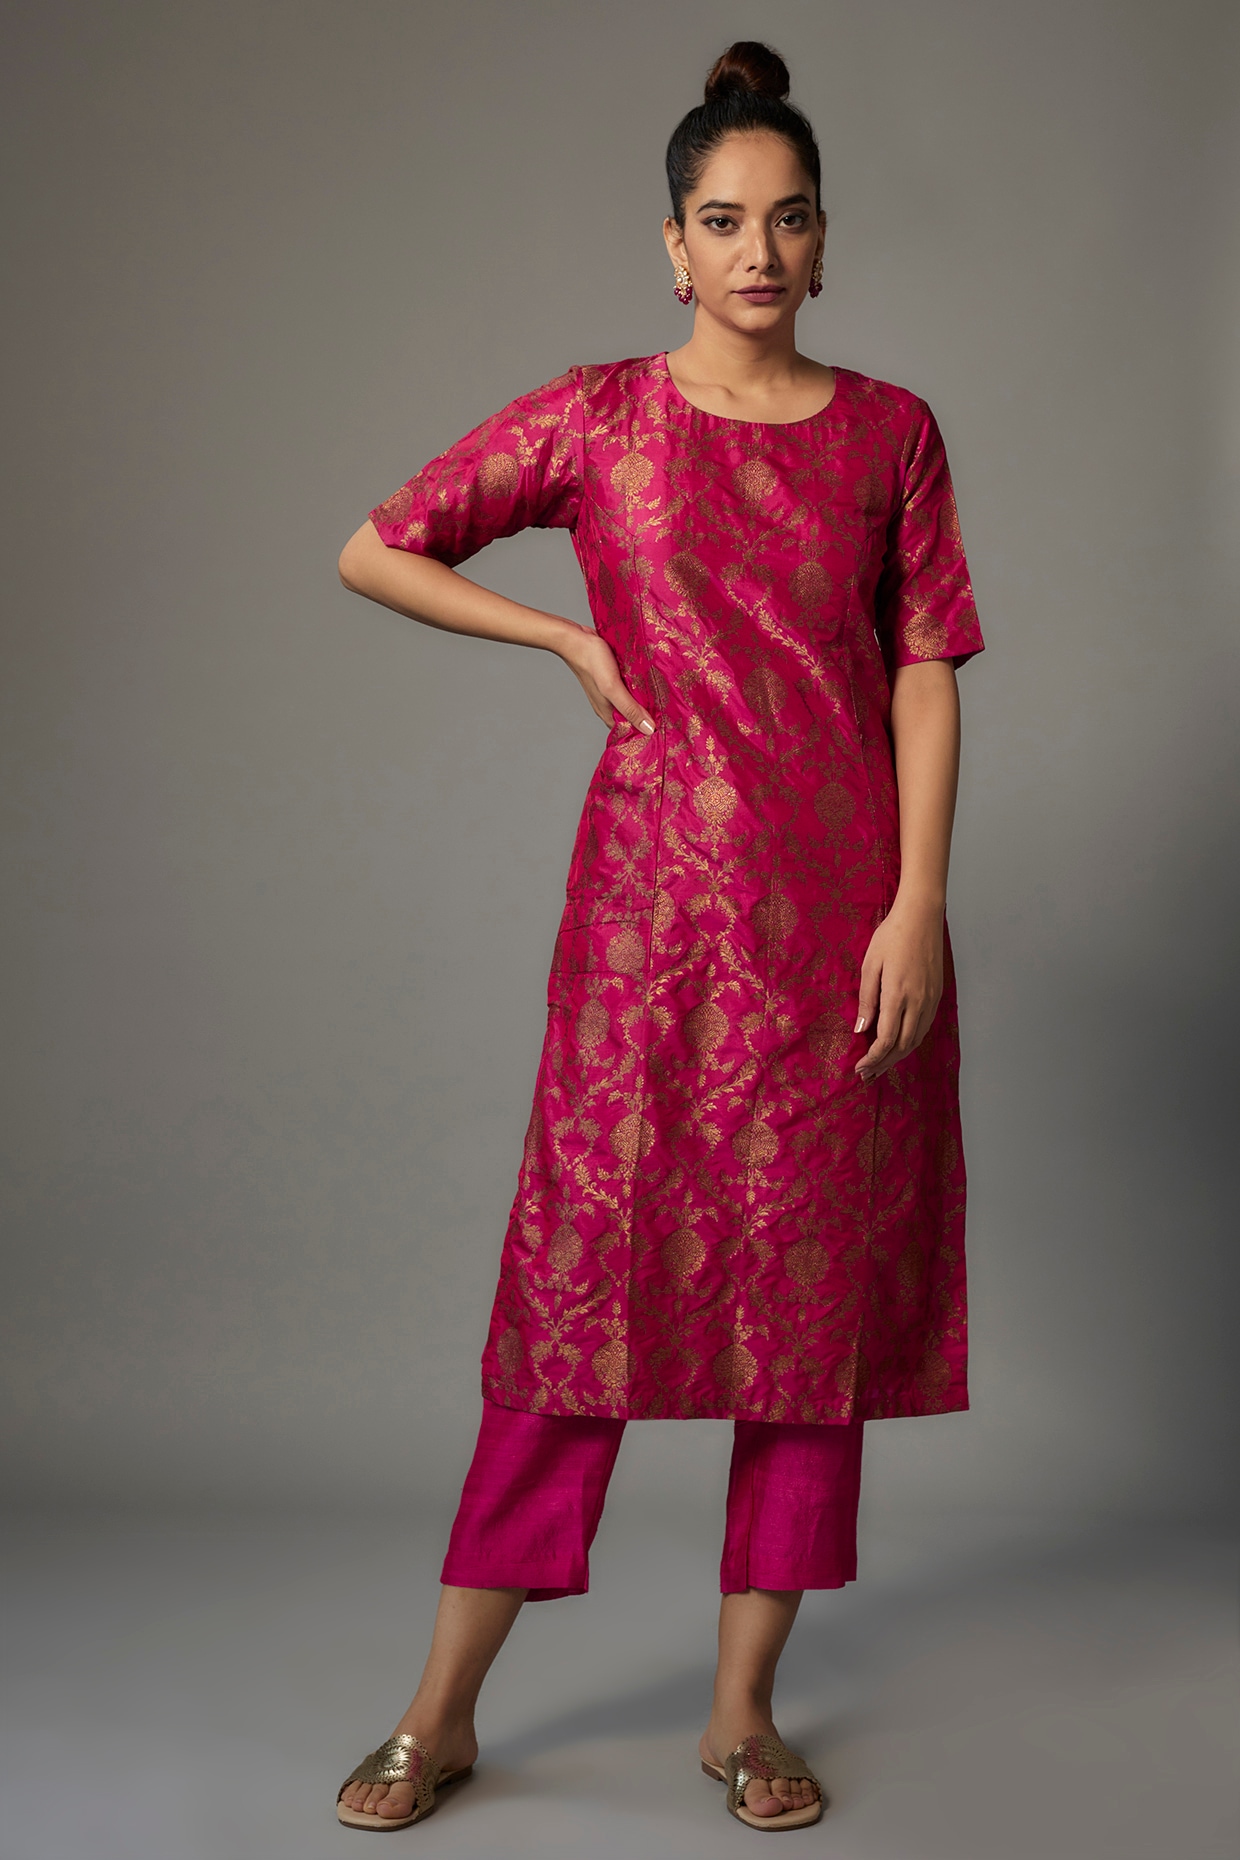 Discover more than 144 latest banarasi kurti designs